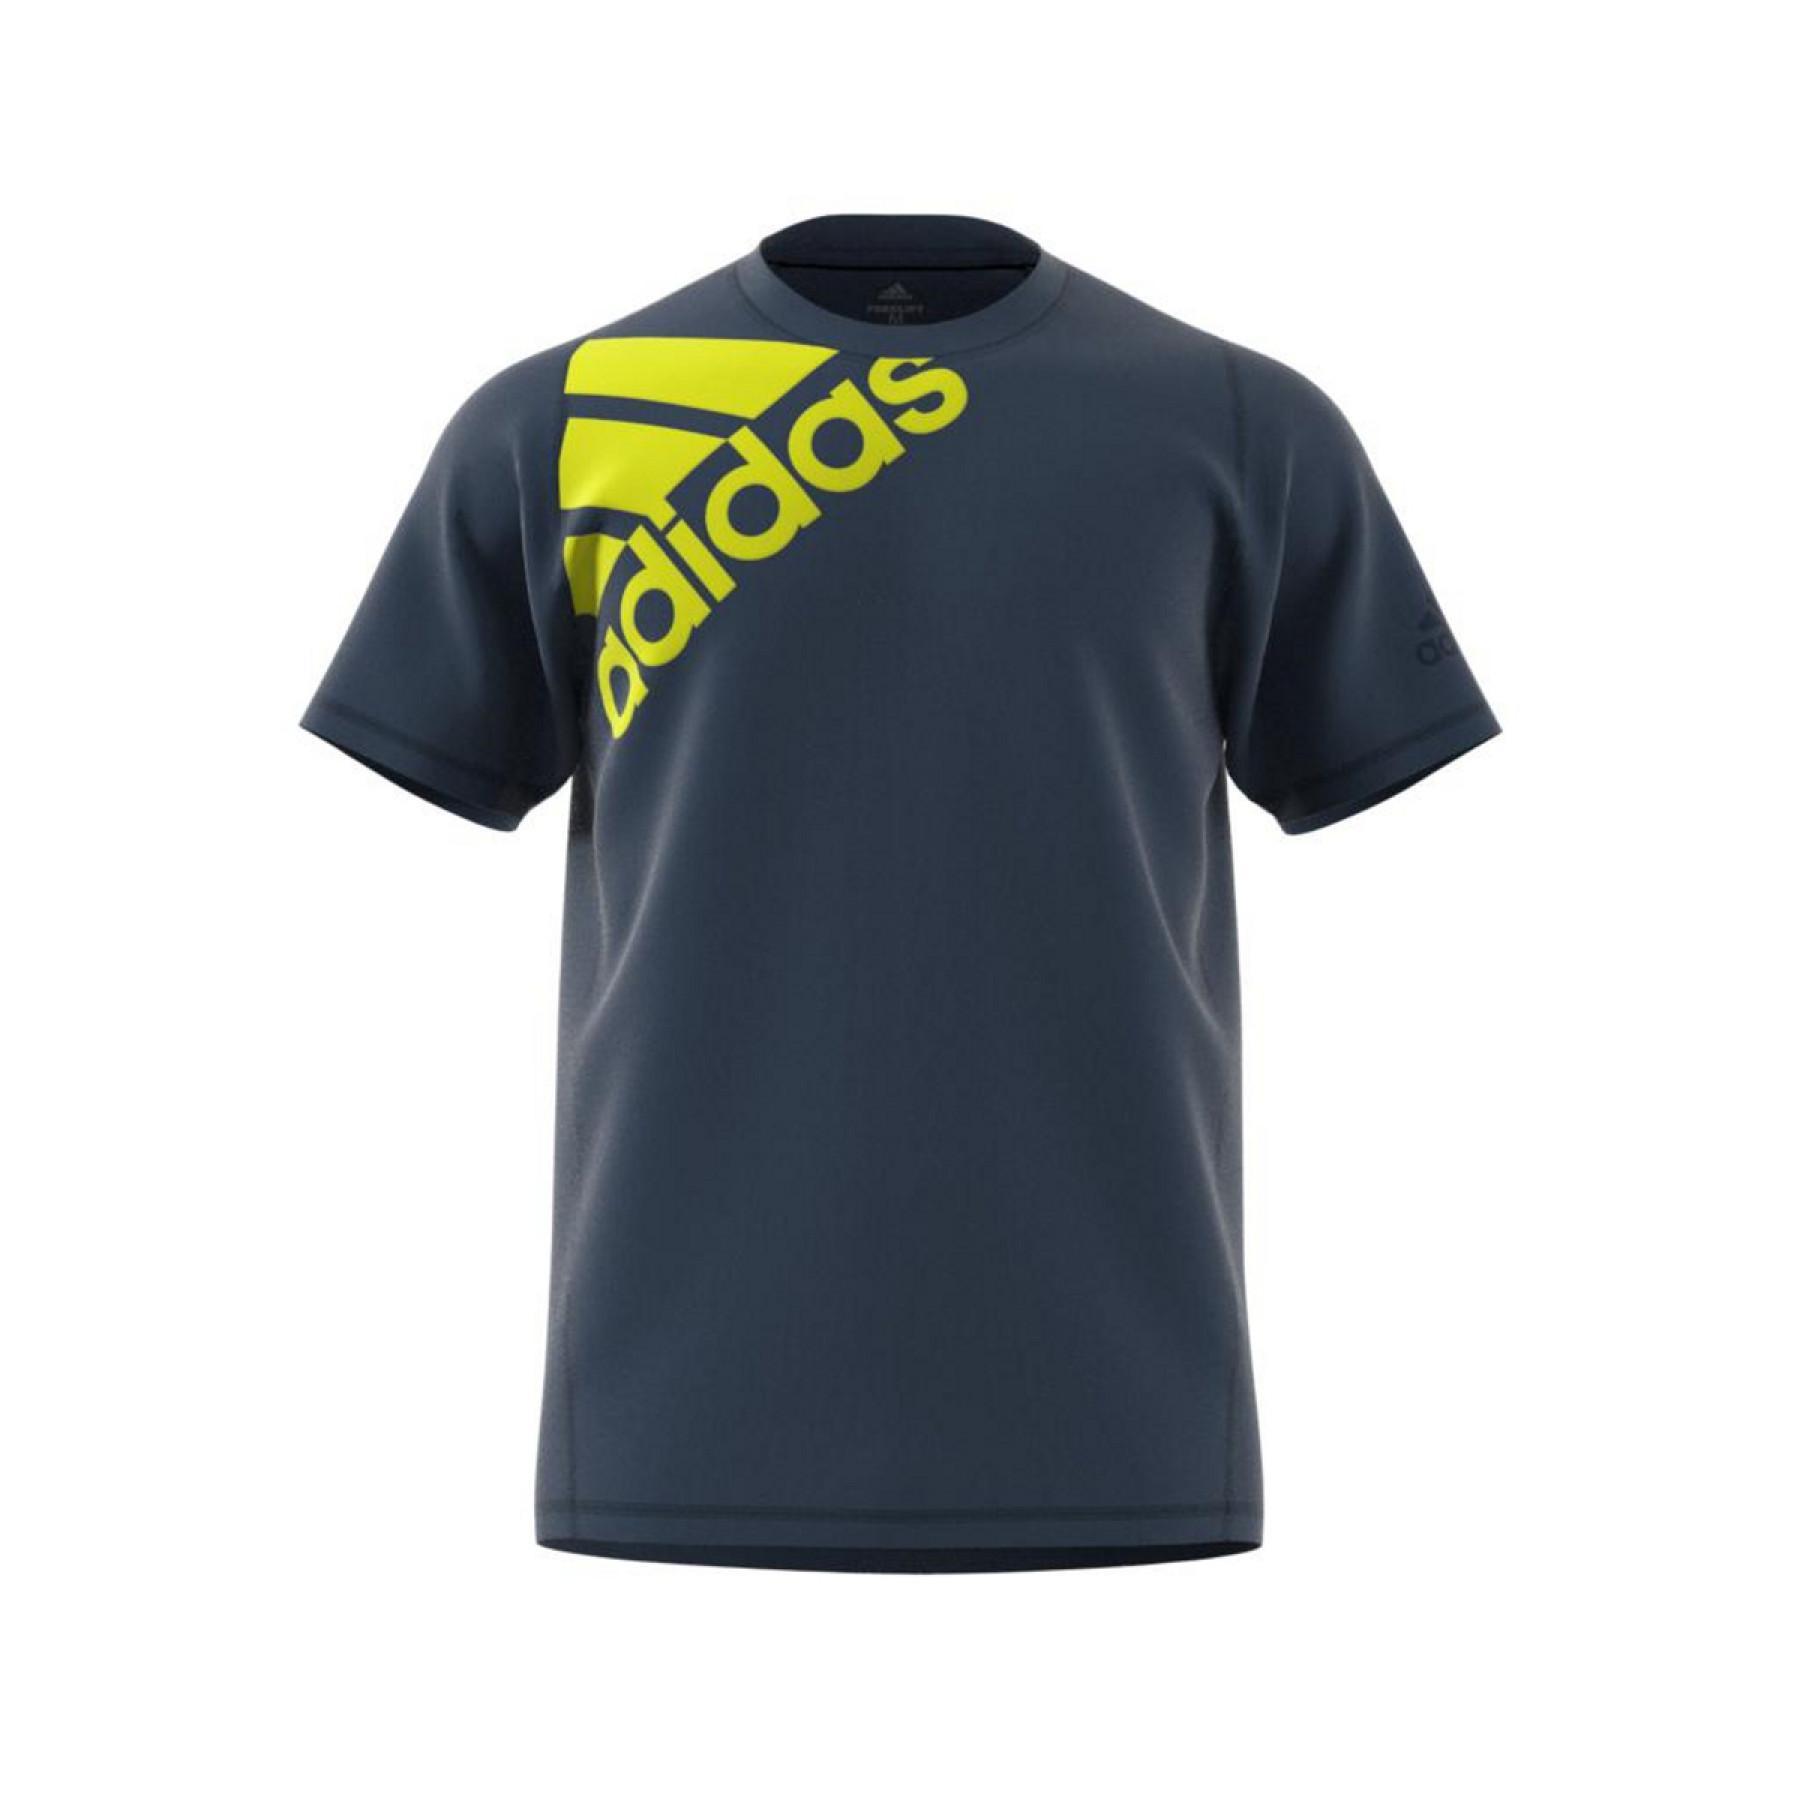 T-shirt adidas Freelift Badge of Sport Graphic